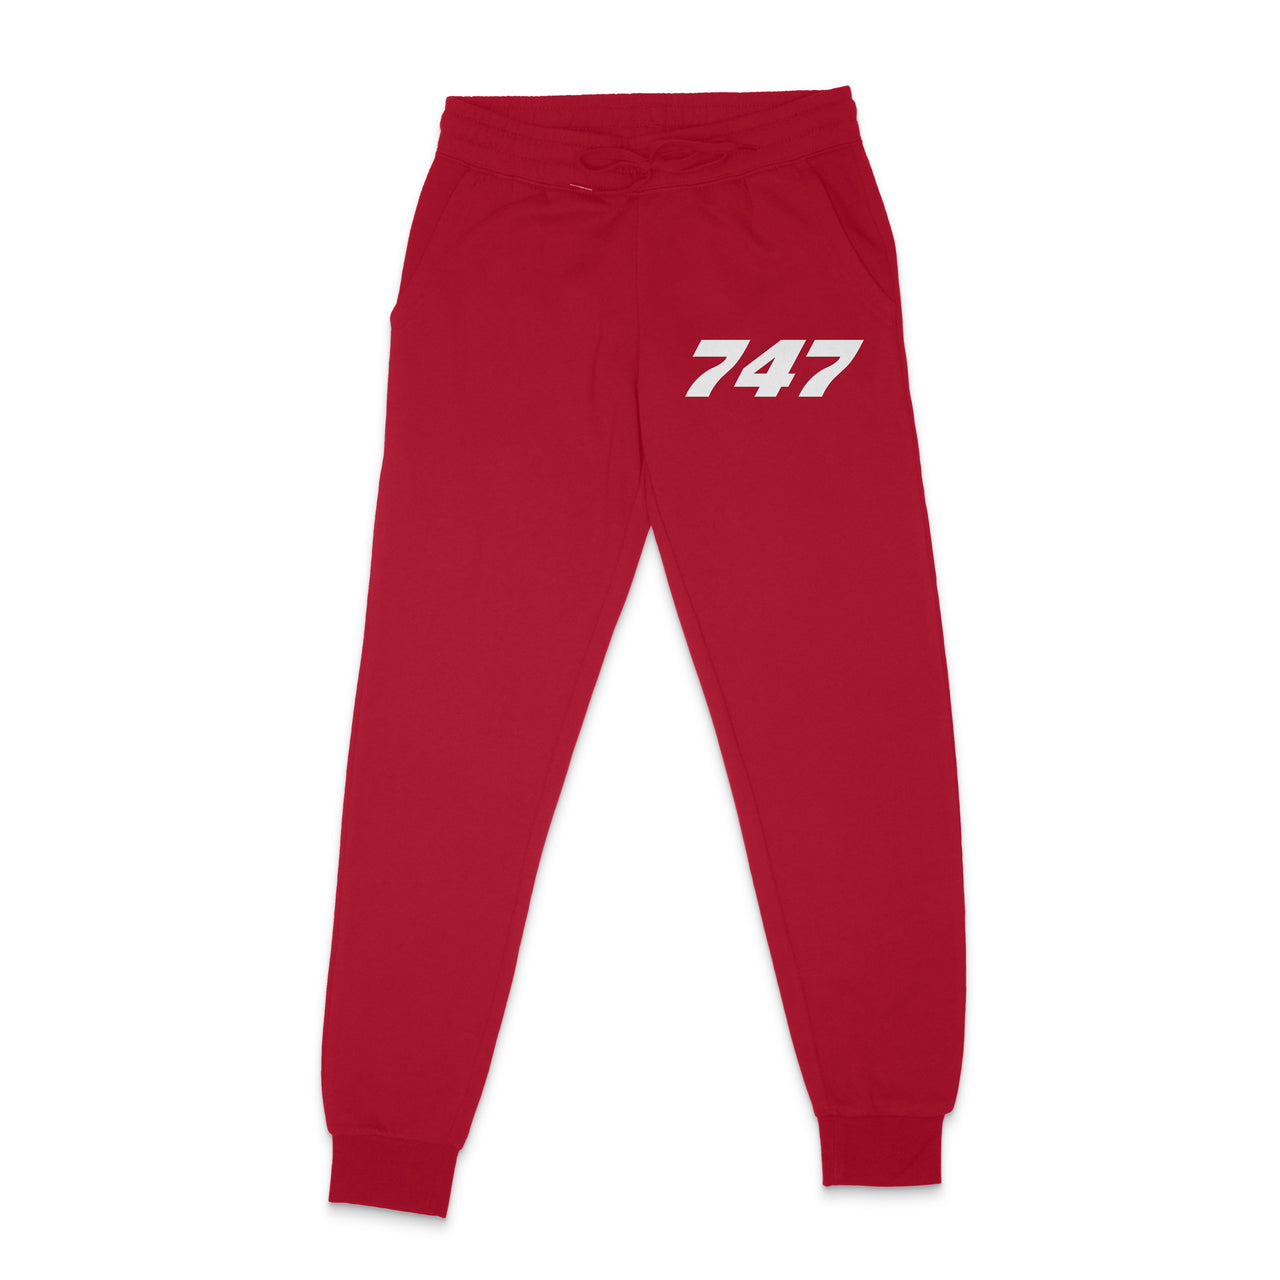 747 Flat Text Designed Sweatpants